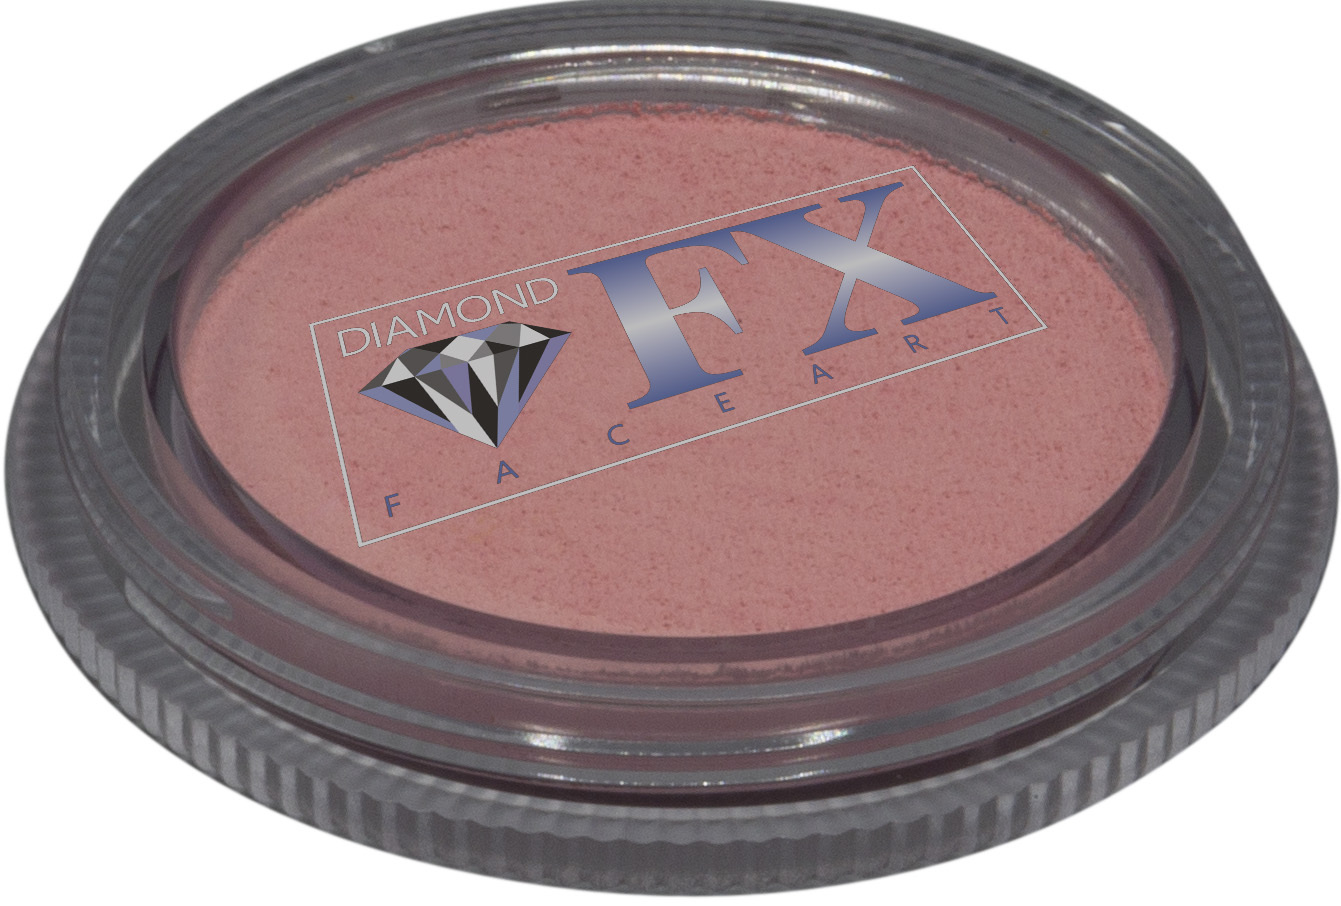 Diamond FX Powder Pink 30g - Small Image